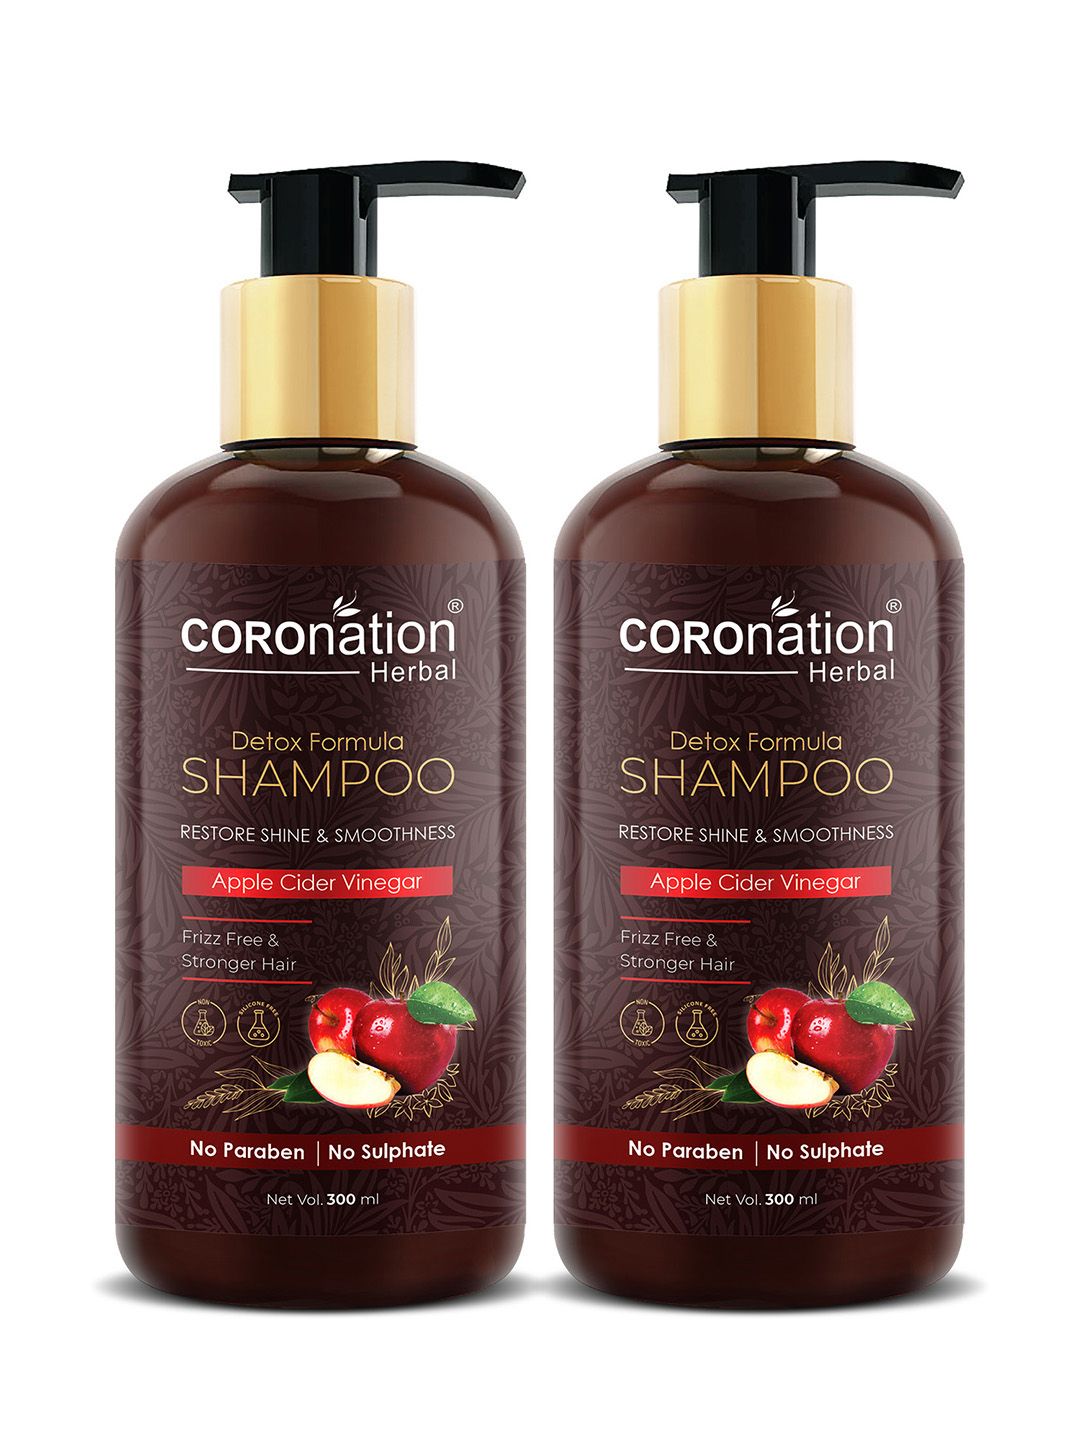 COROnation Herbal Set of 2 Apple Cider Vinegar Detox Formula Shampoo 300 ml Each Price in India